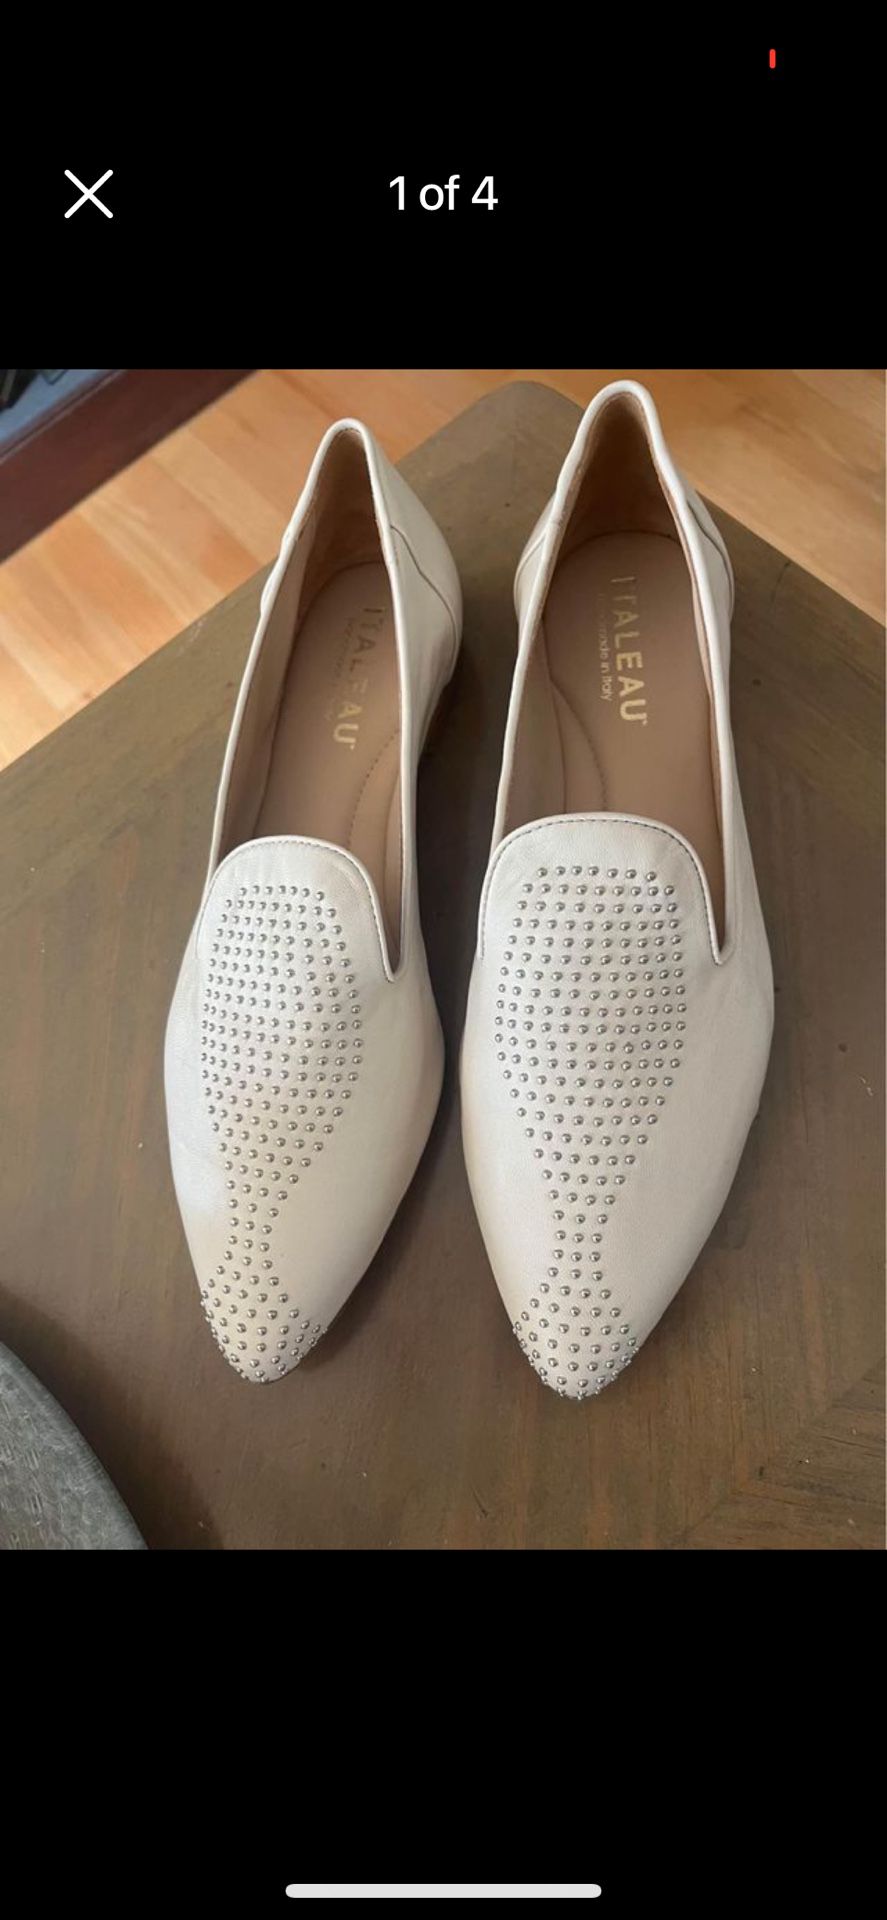 Staley Handmade Italian Flats Shoes Size 10